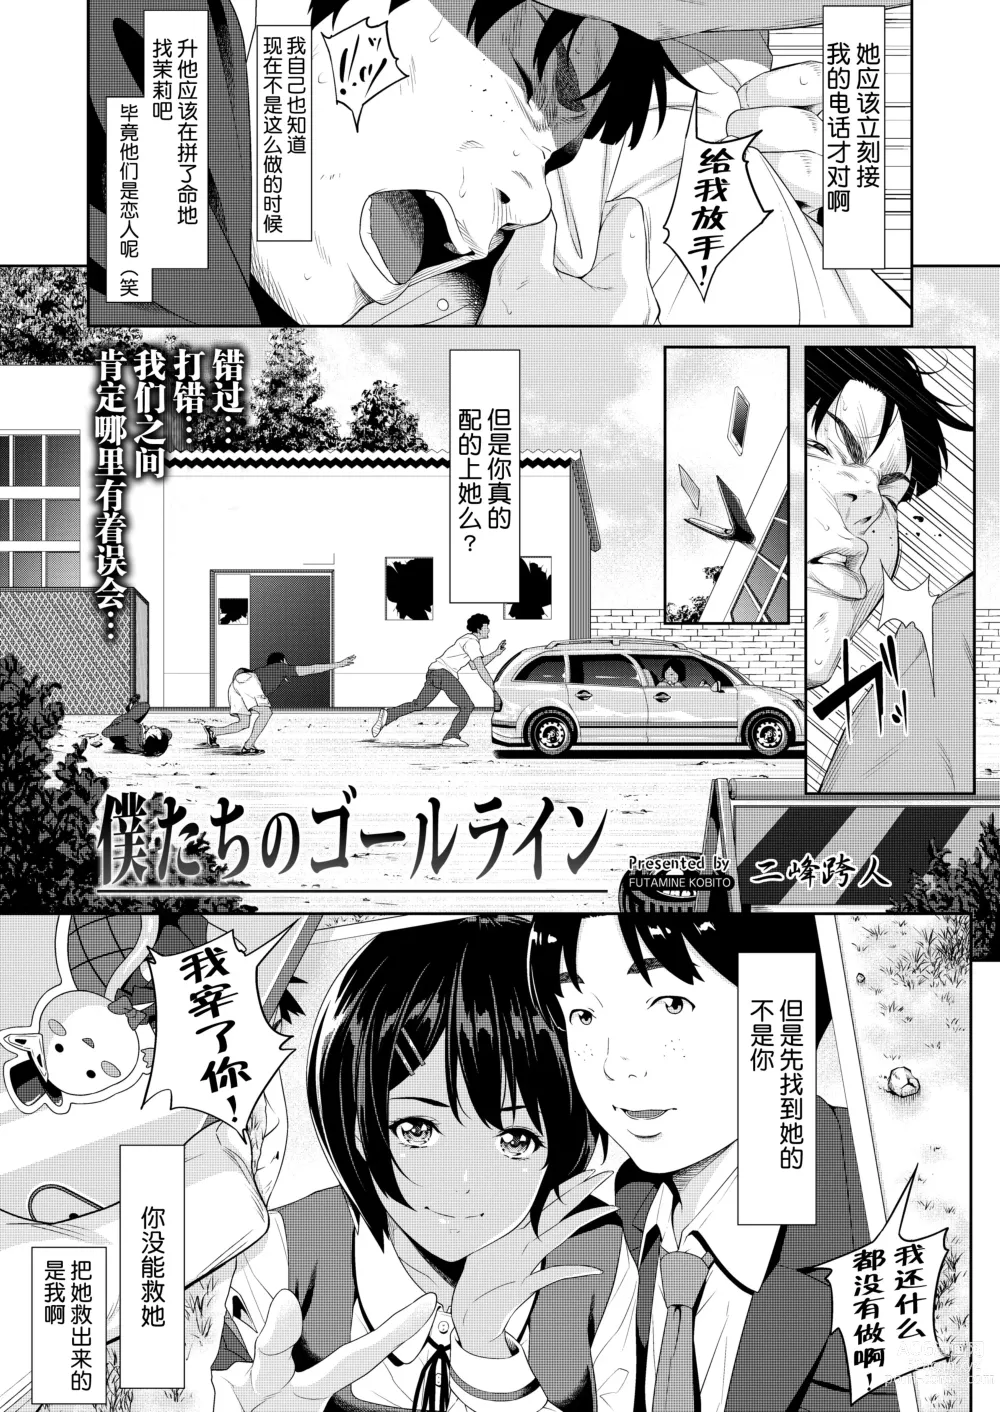 Page 1 of manga Bokutachi no Goal Line